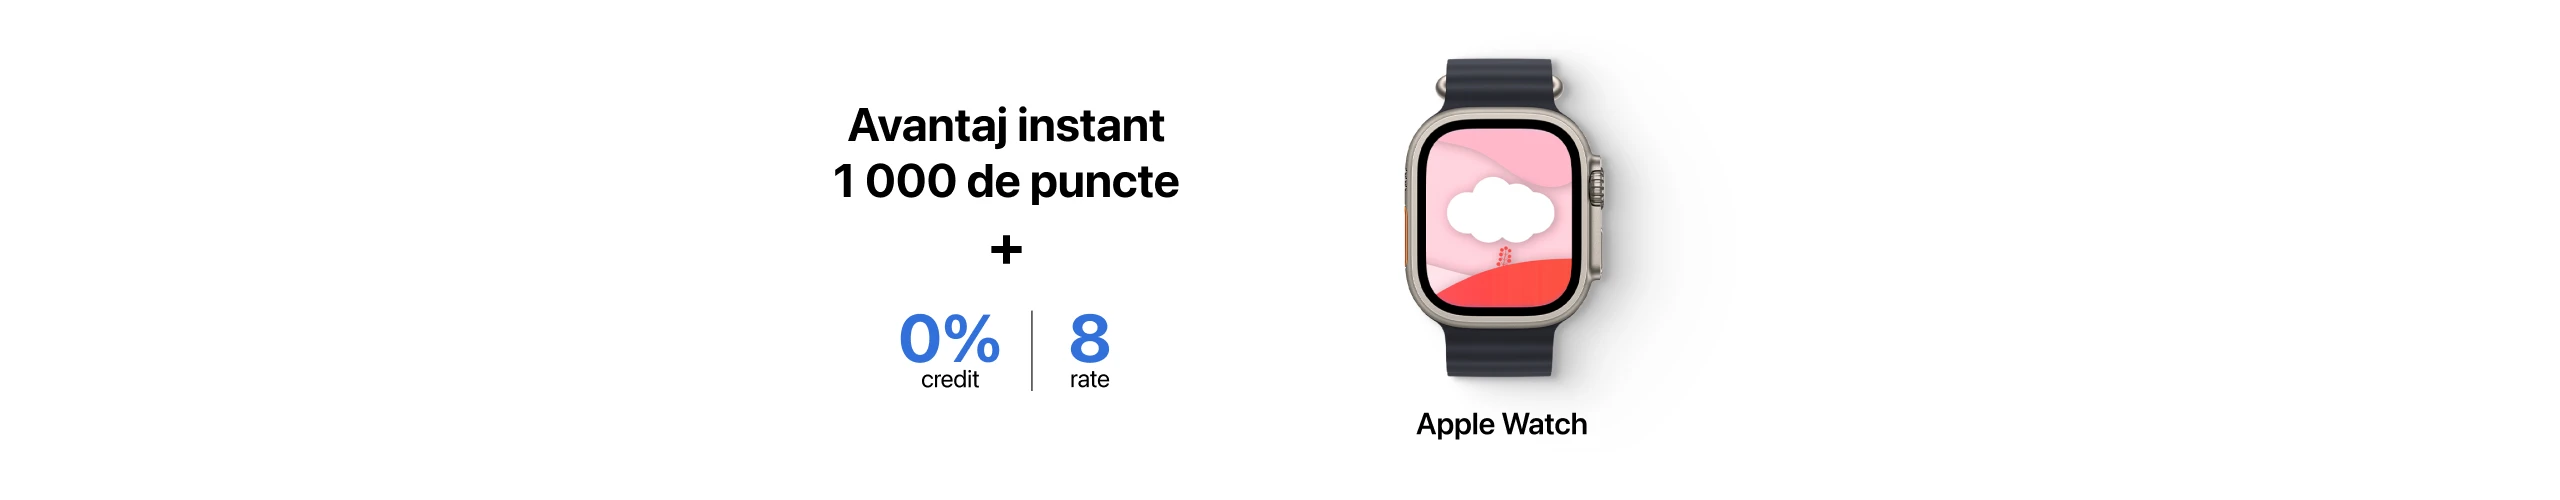 Avantaj instant 1000 de puncte + Credit 0% | 8 Rate la Apple Watch